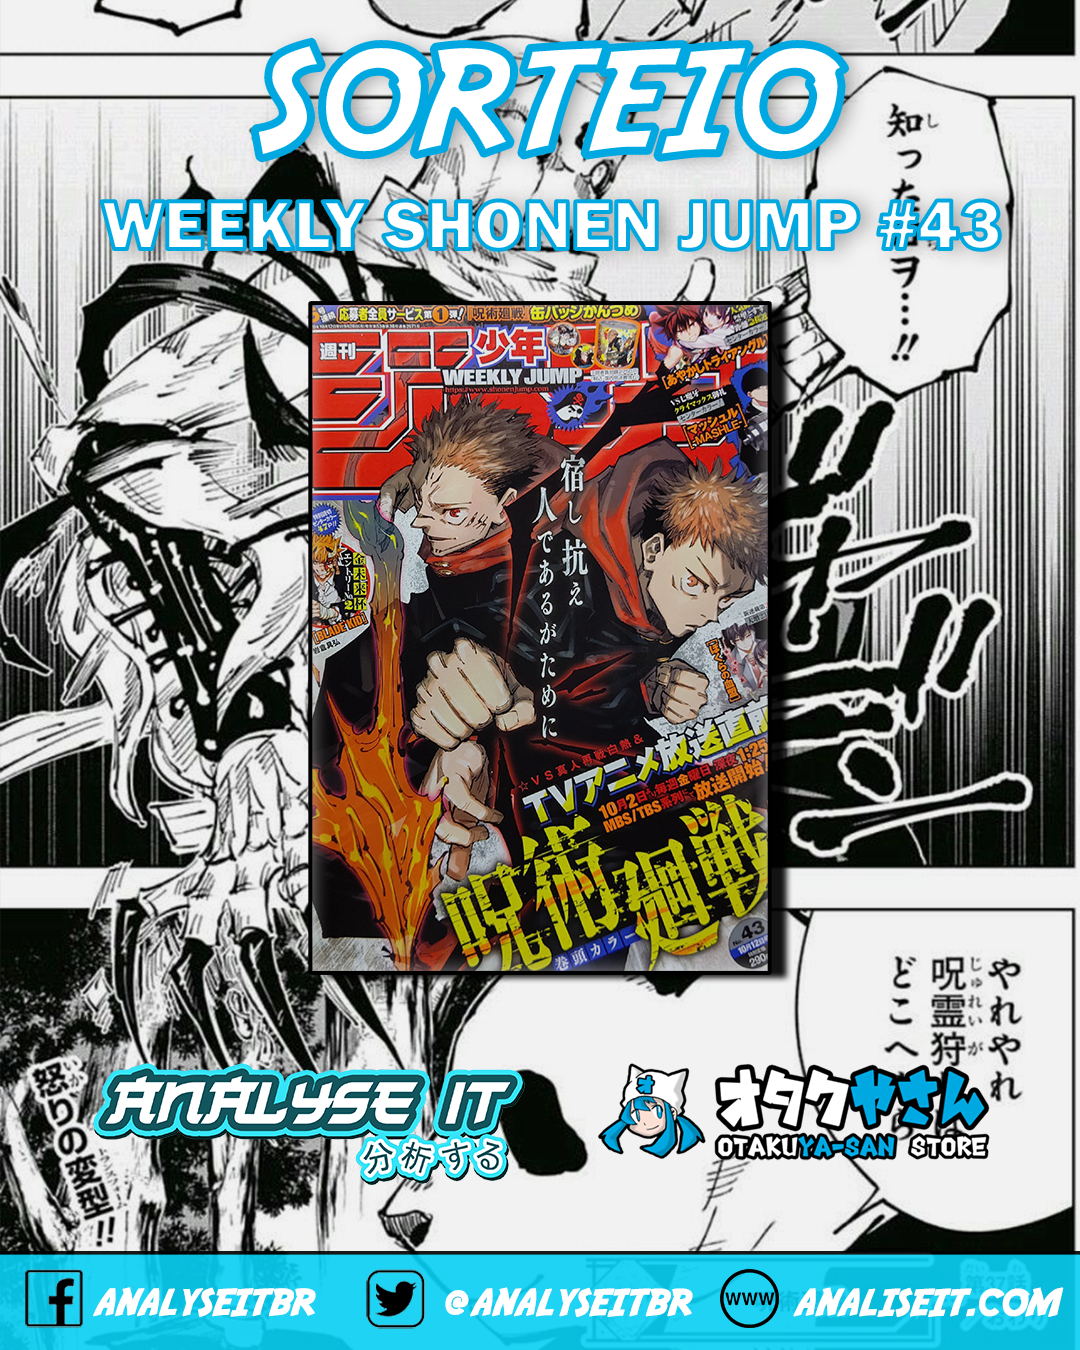 TOC: Weekly Shonen Magazine #52 (Ano 2020) - Analyse It